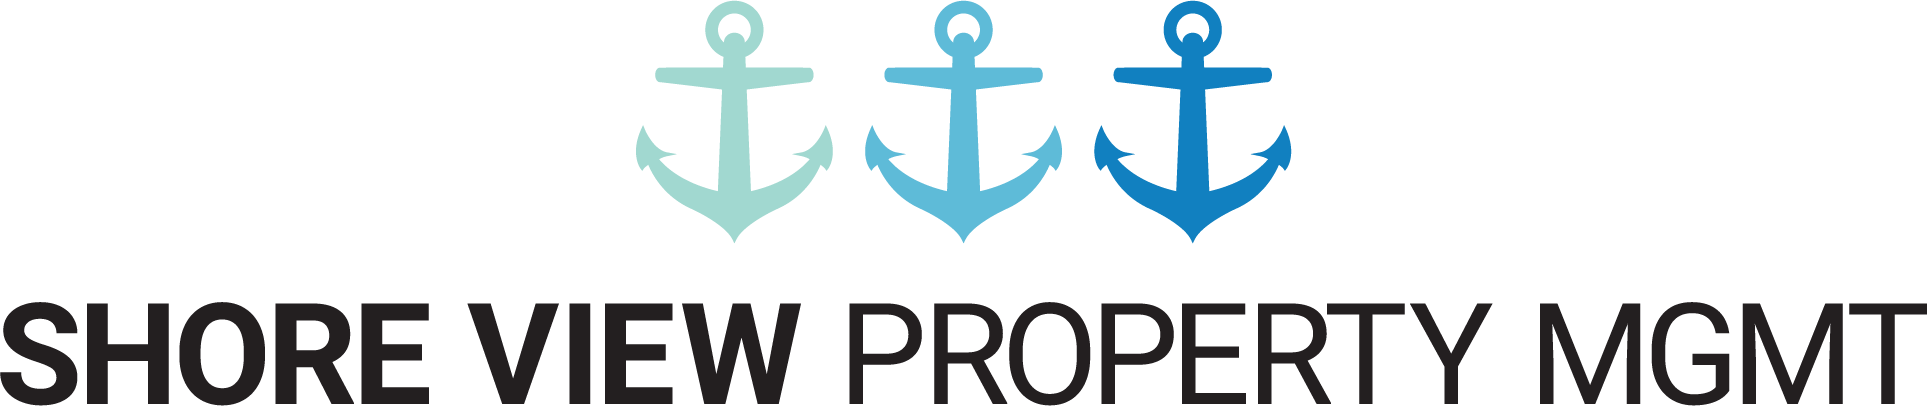 Shore View Property Management logo